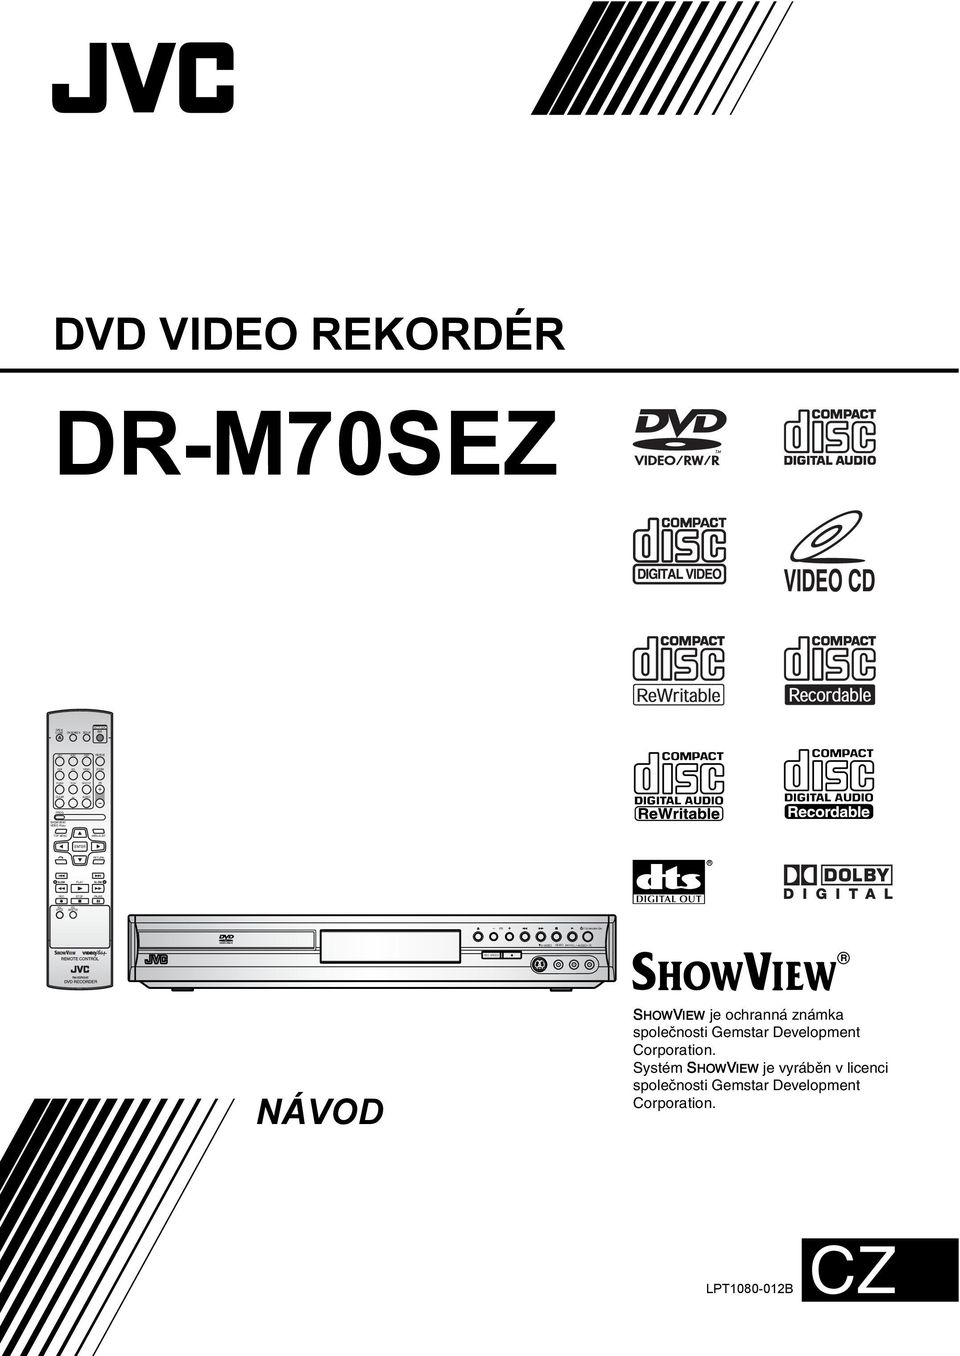 SPEED REC MONITOR S-VIDEO VIDEO (MONO) L AUDIO R R NÁVOD SHOWVIEW je ochranná známka společnosti Gemstar